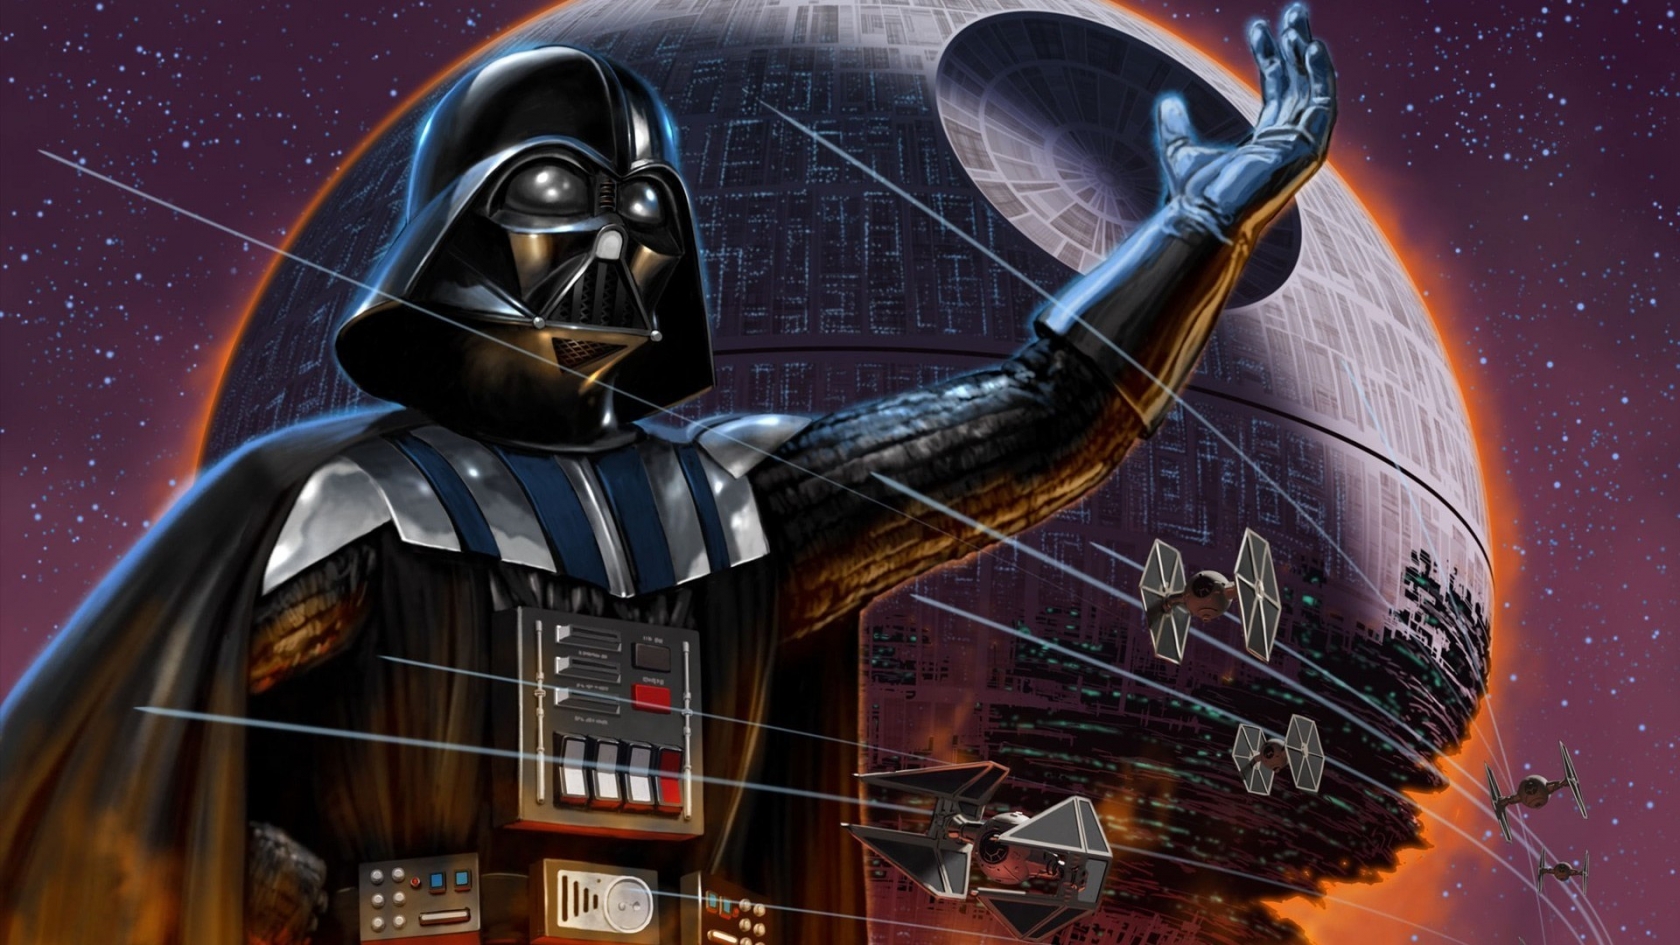 Darth Vader Star Wars Character for 1680 x 945 HDTV resolution